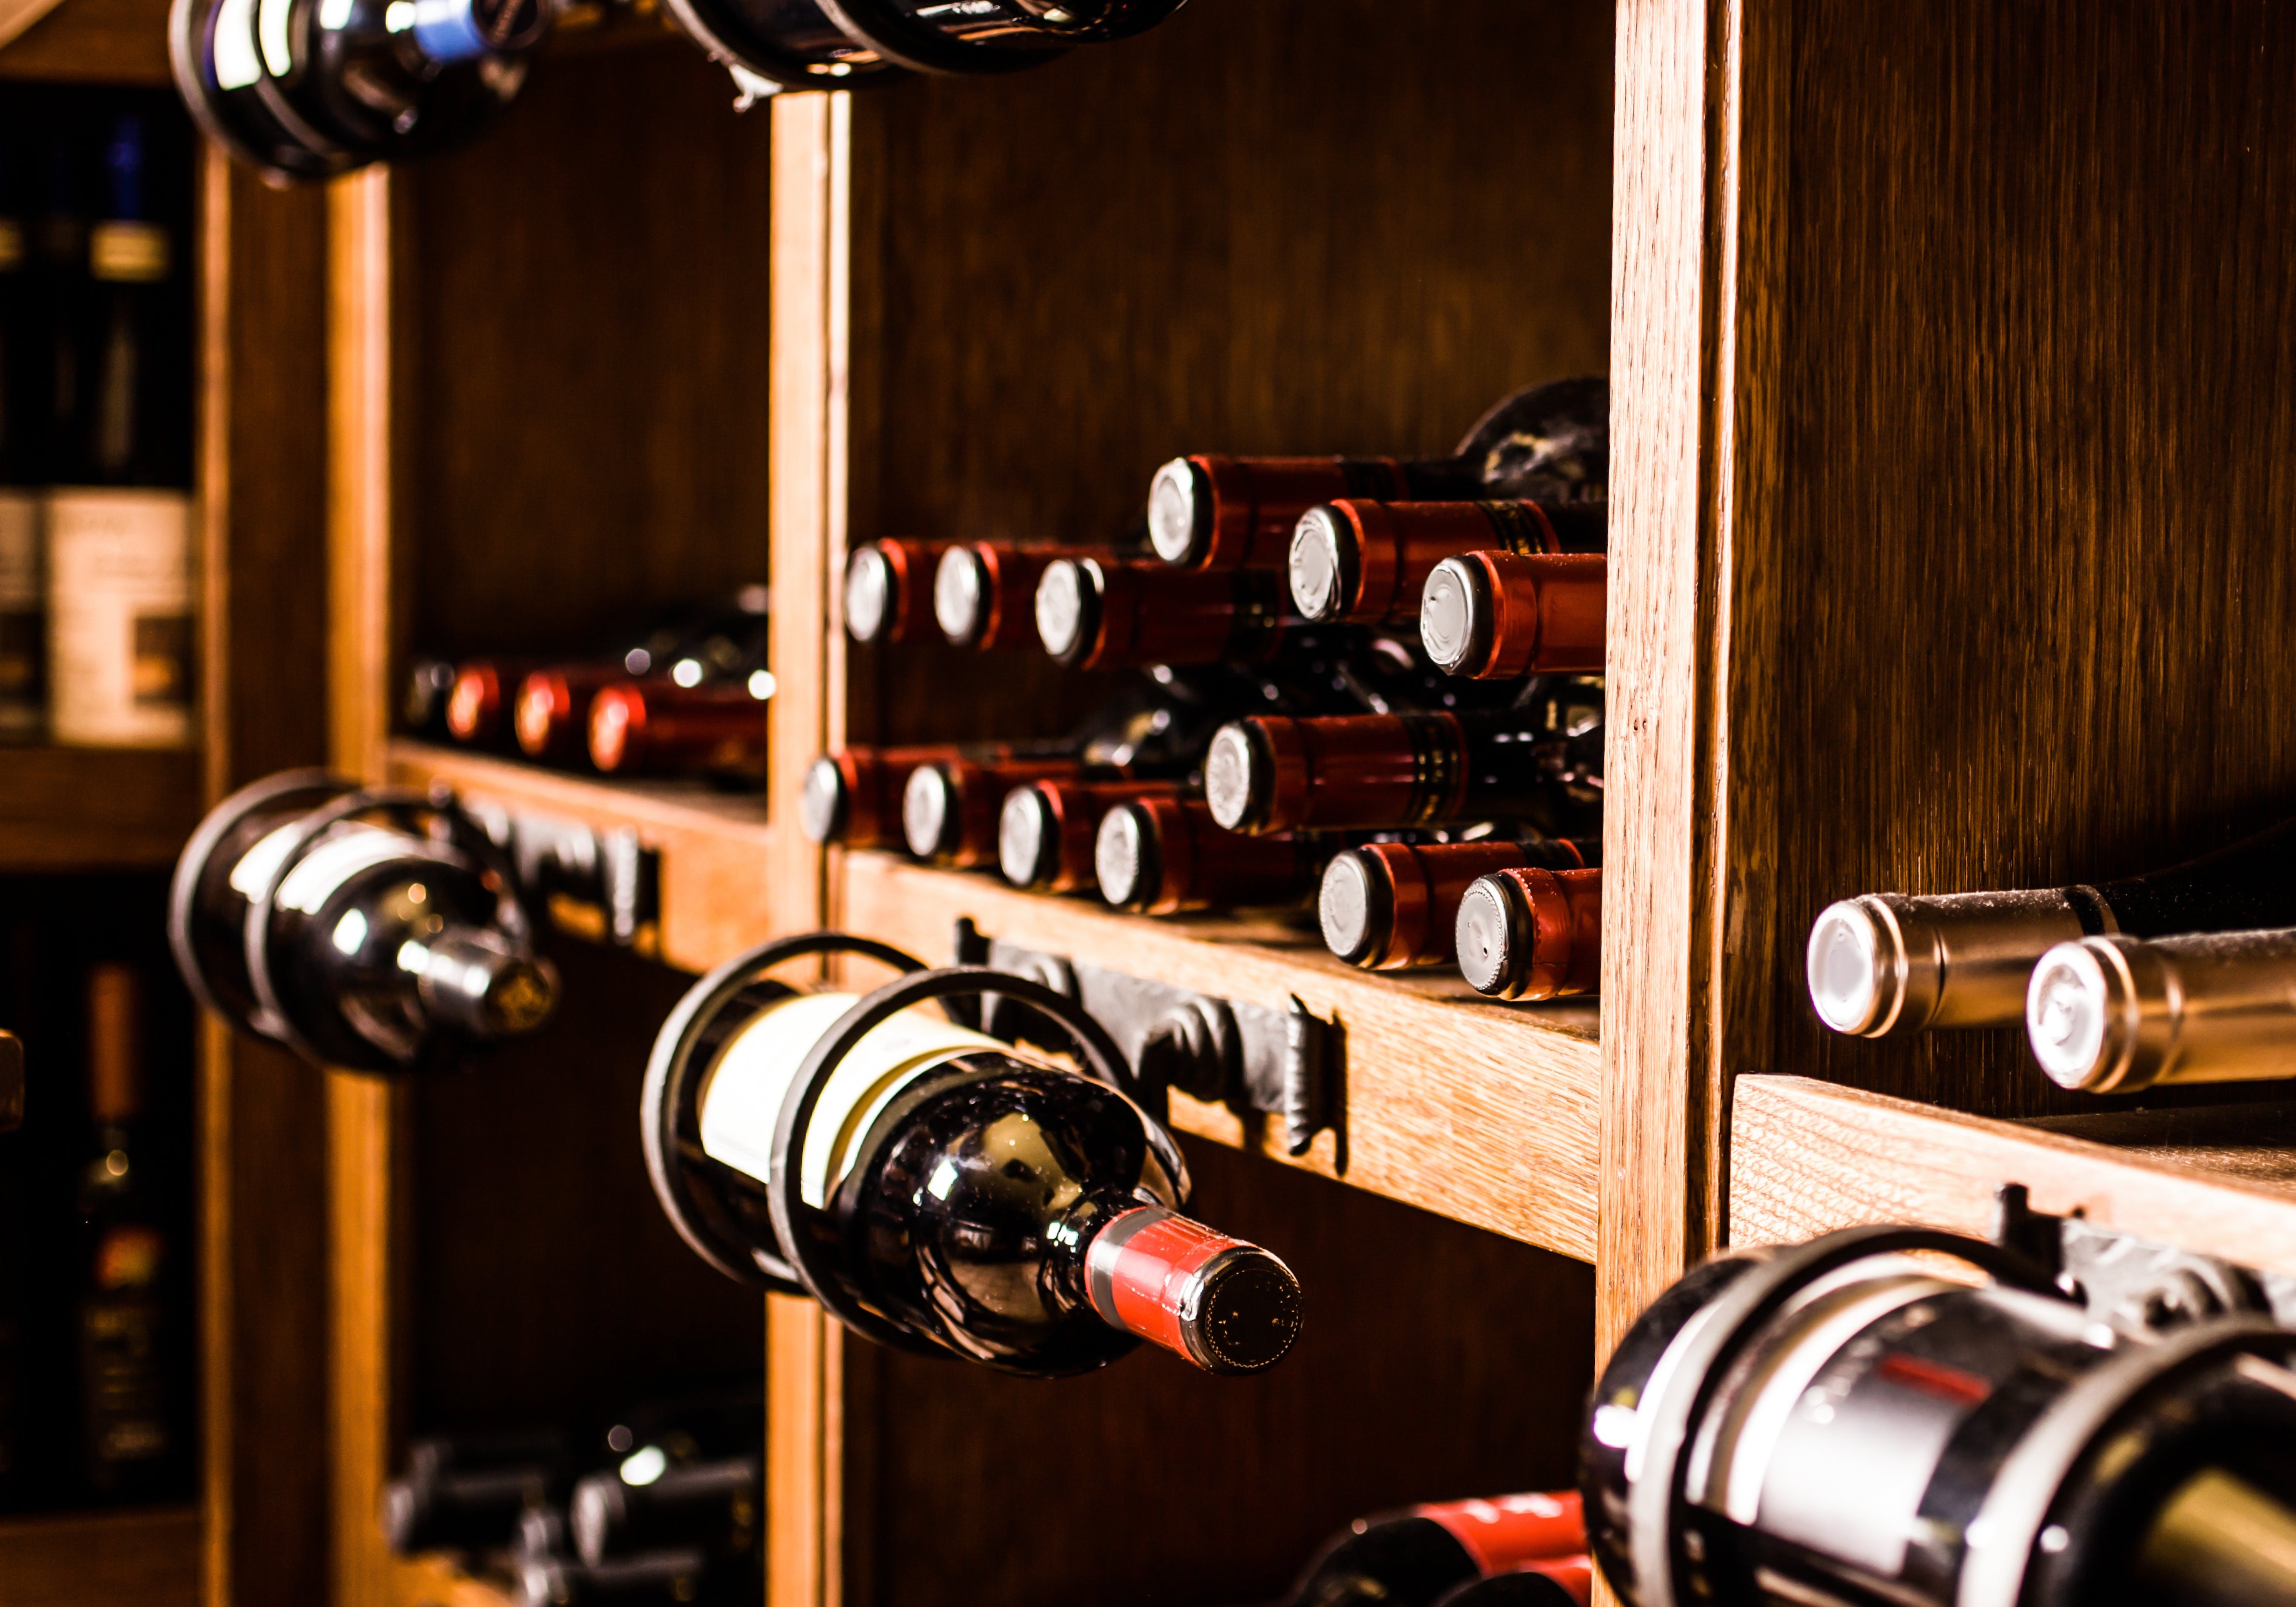 How sunlight affects your wine, lightstrike, sunlight can damage wine wine bottles on a shelf